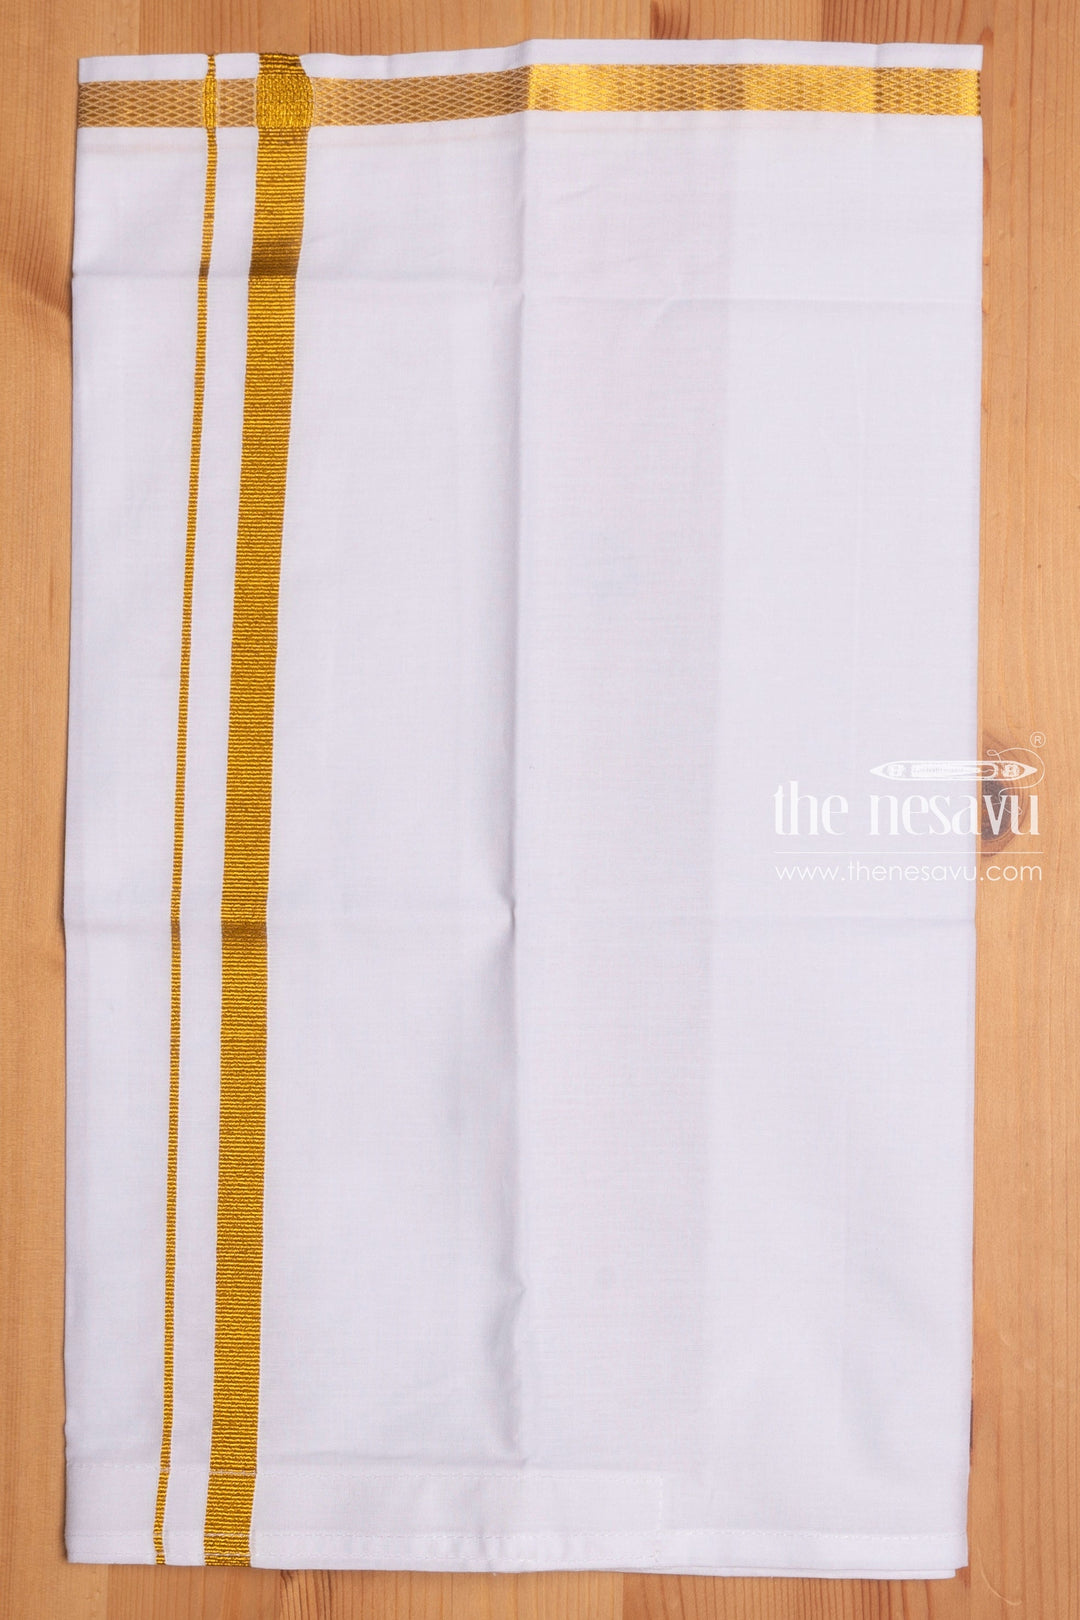 The Nesavu Boys Vesti Traditional Cotton Vesti for Boys Elegance in White and Gold Nesavu 12 (3M) / White / Cotton D005-12 Boys White and Gold Traditional Vesti/Dothi | Ethnic Indian Clothing for Kids | The Nesavu